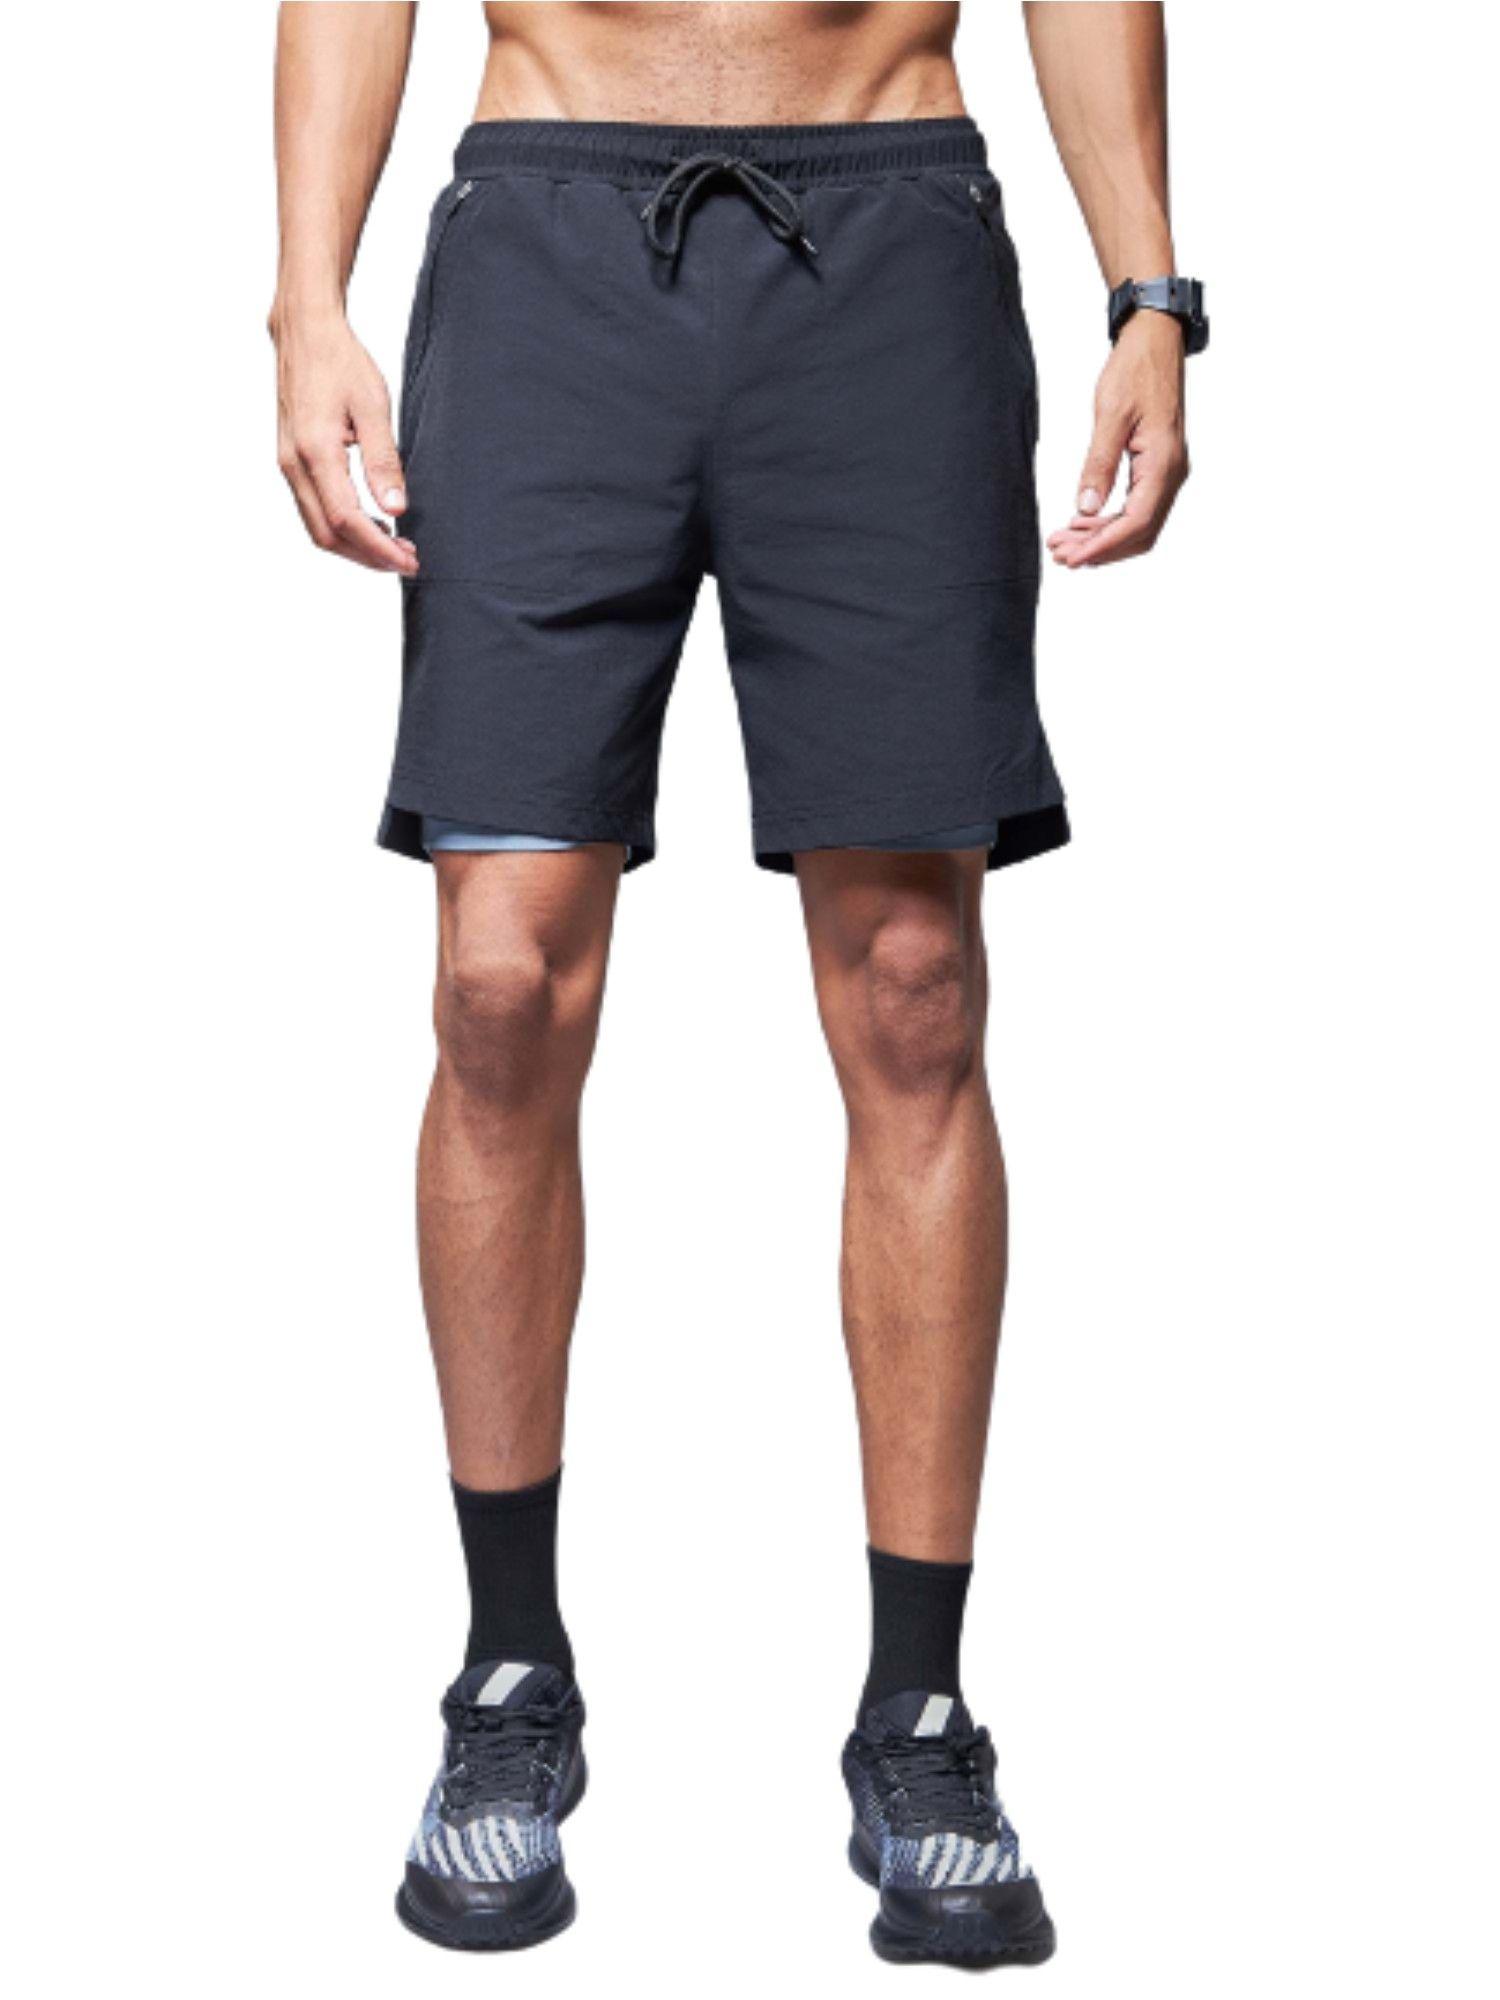 black duoflex shorts